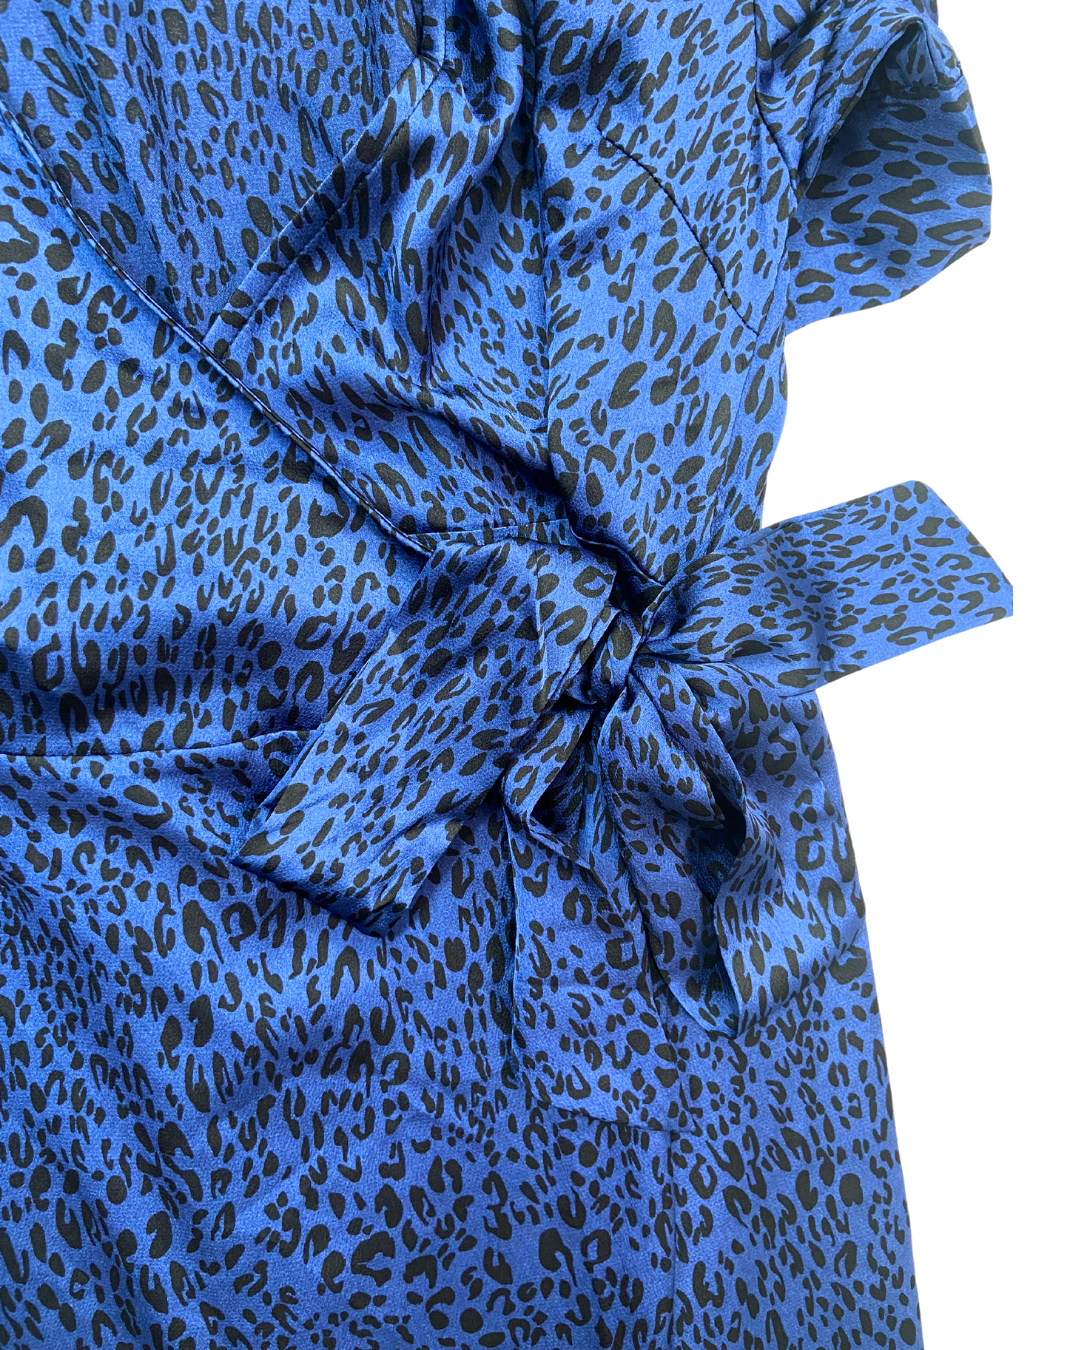 Gini London Blue Leopard Dress